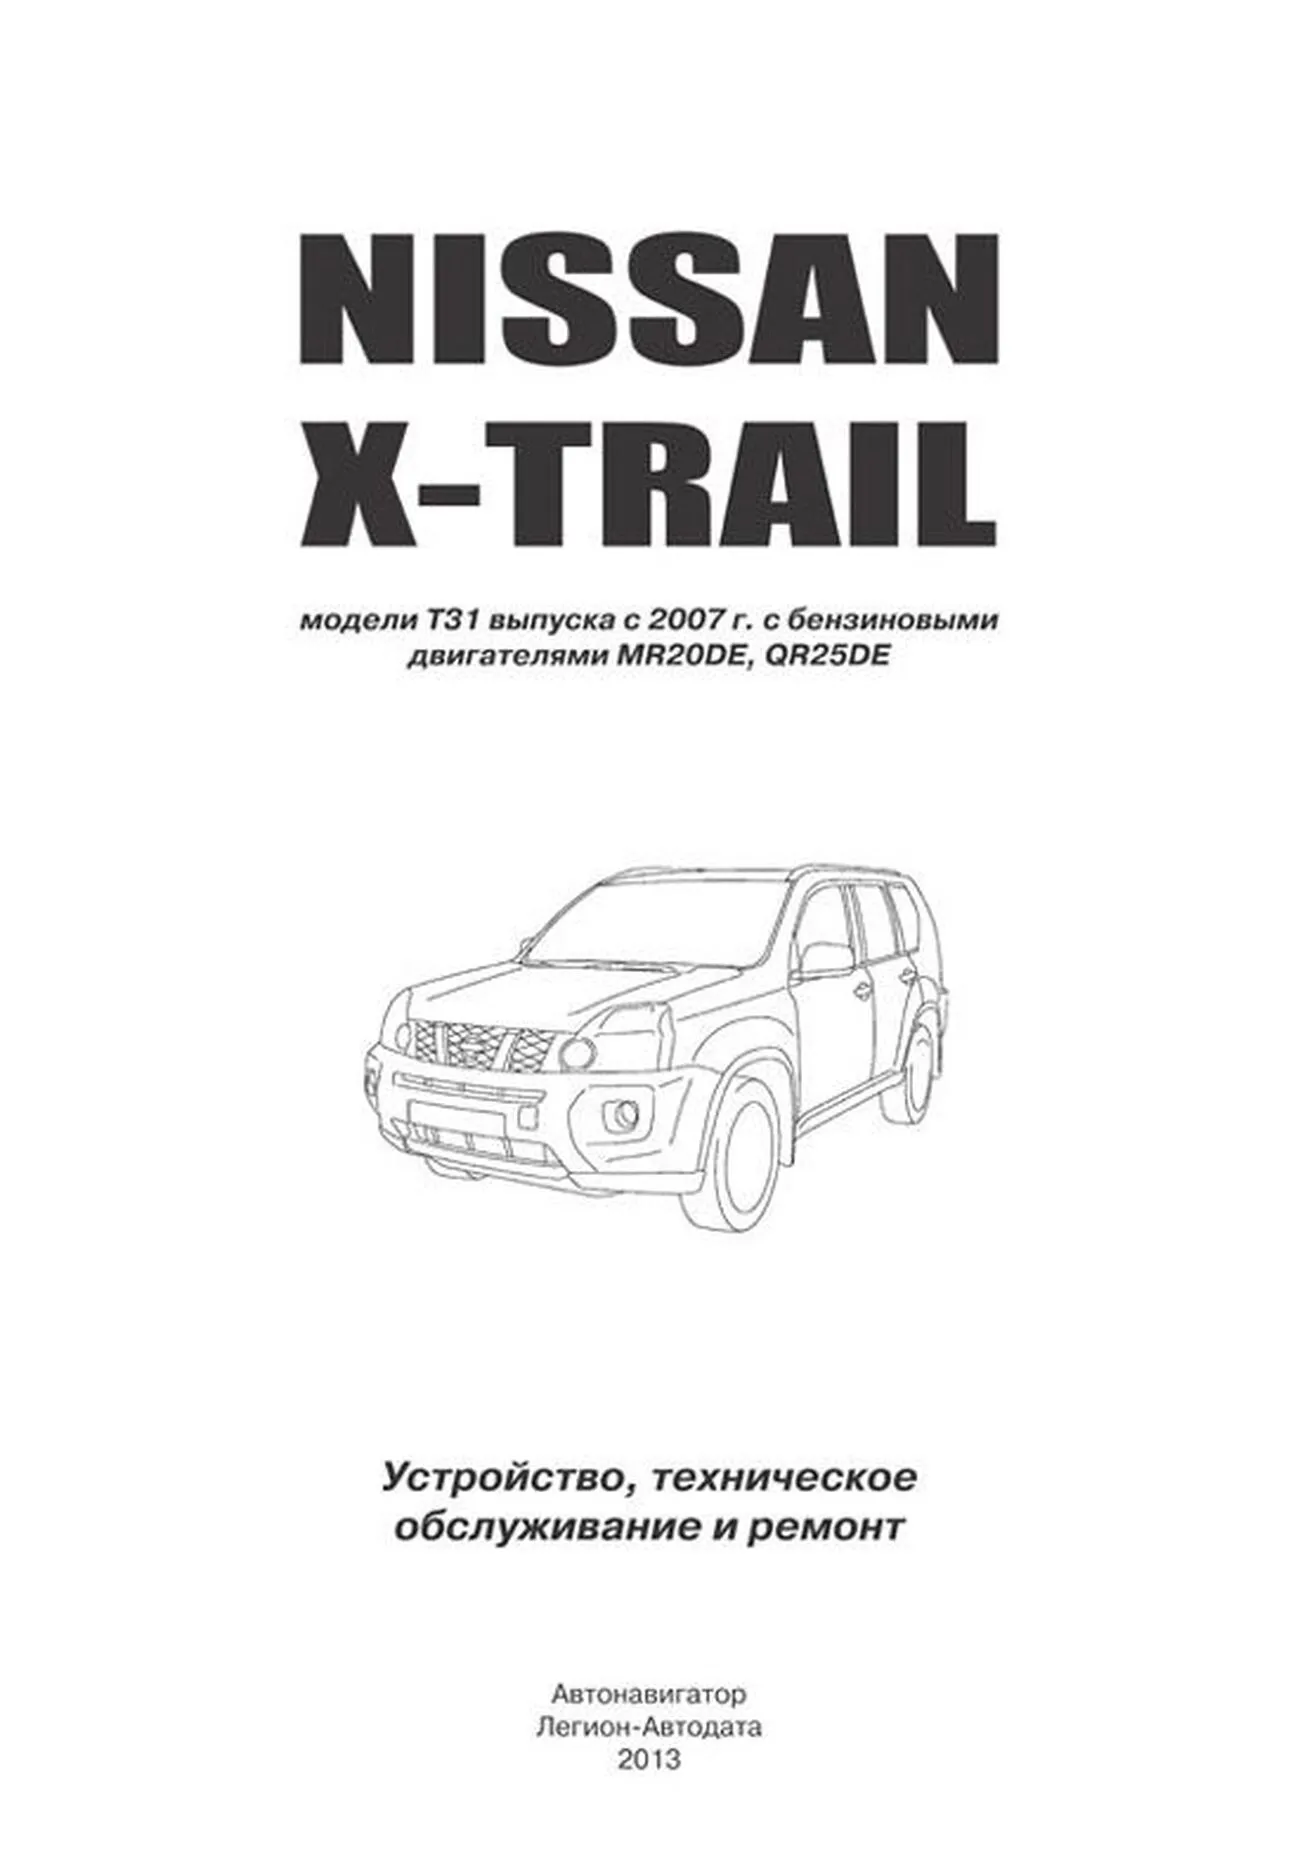 Книга: NISSAN X-TRAIL T31 (б) с 2007 г.в., рем., экспл., то, сер.АВТОЛ. | Автонавигатор